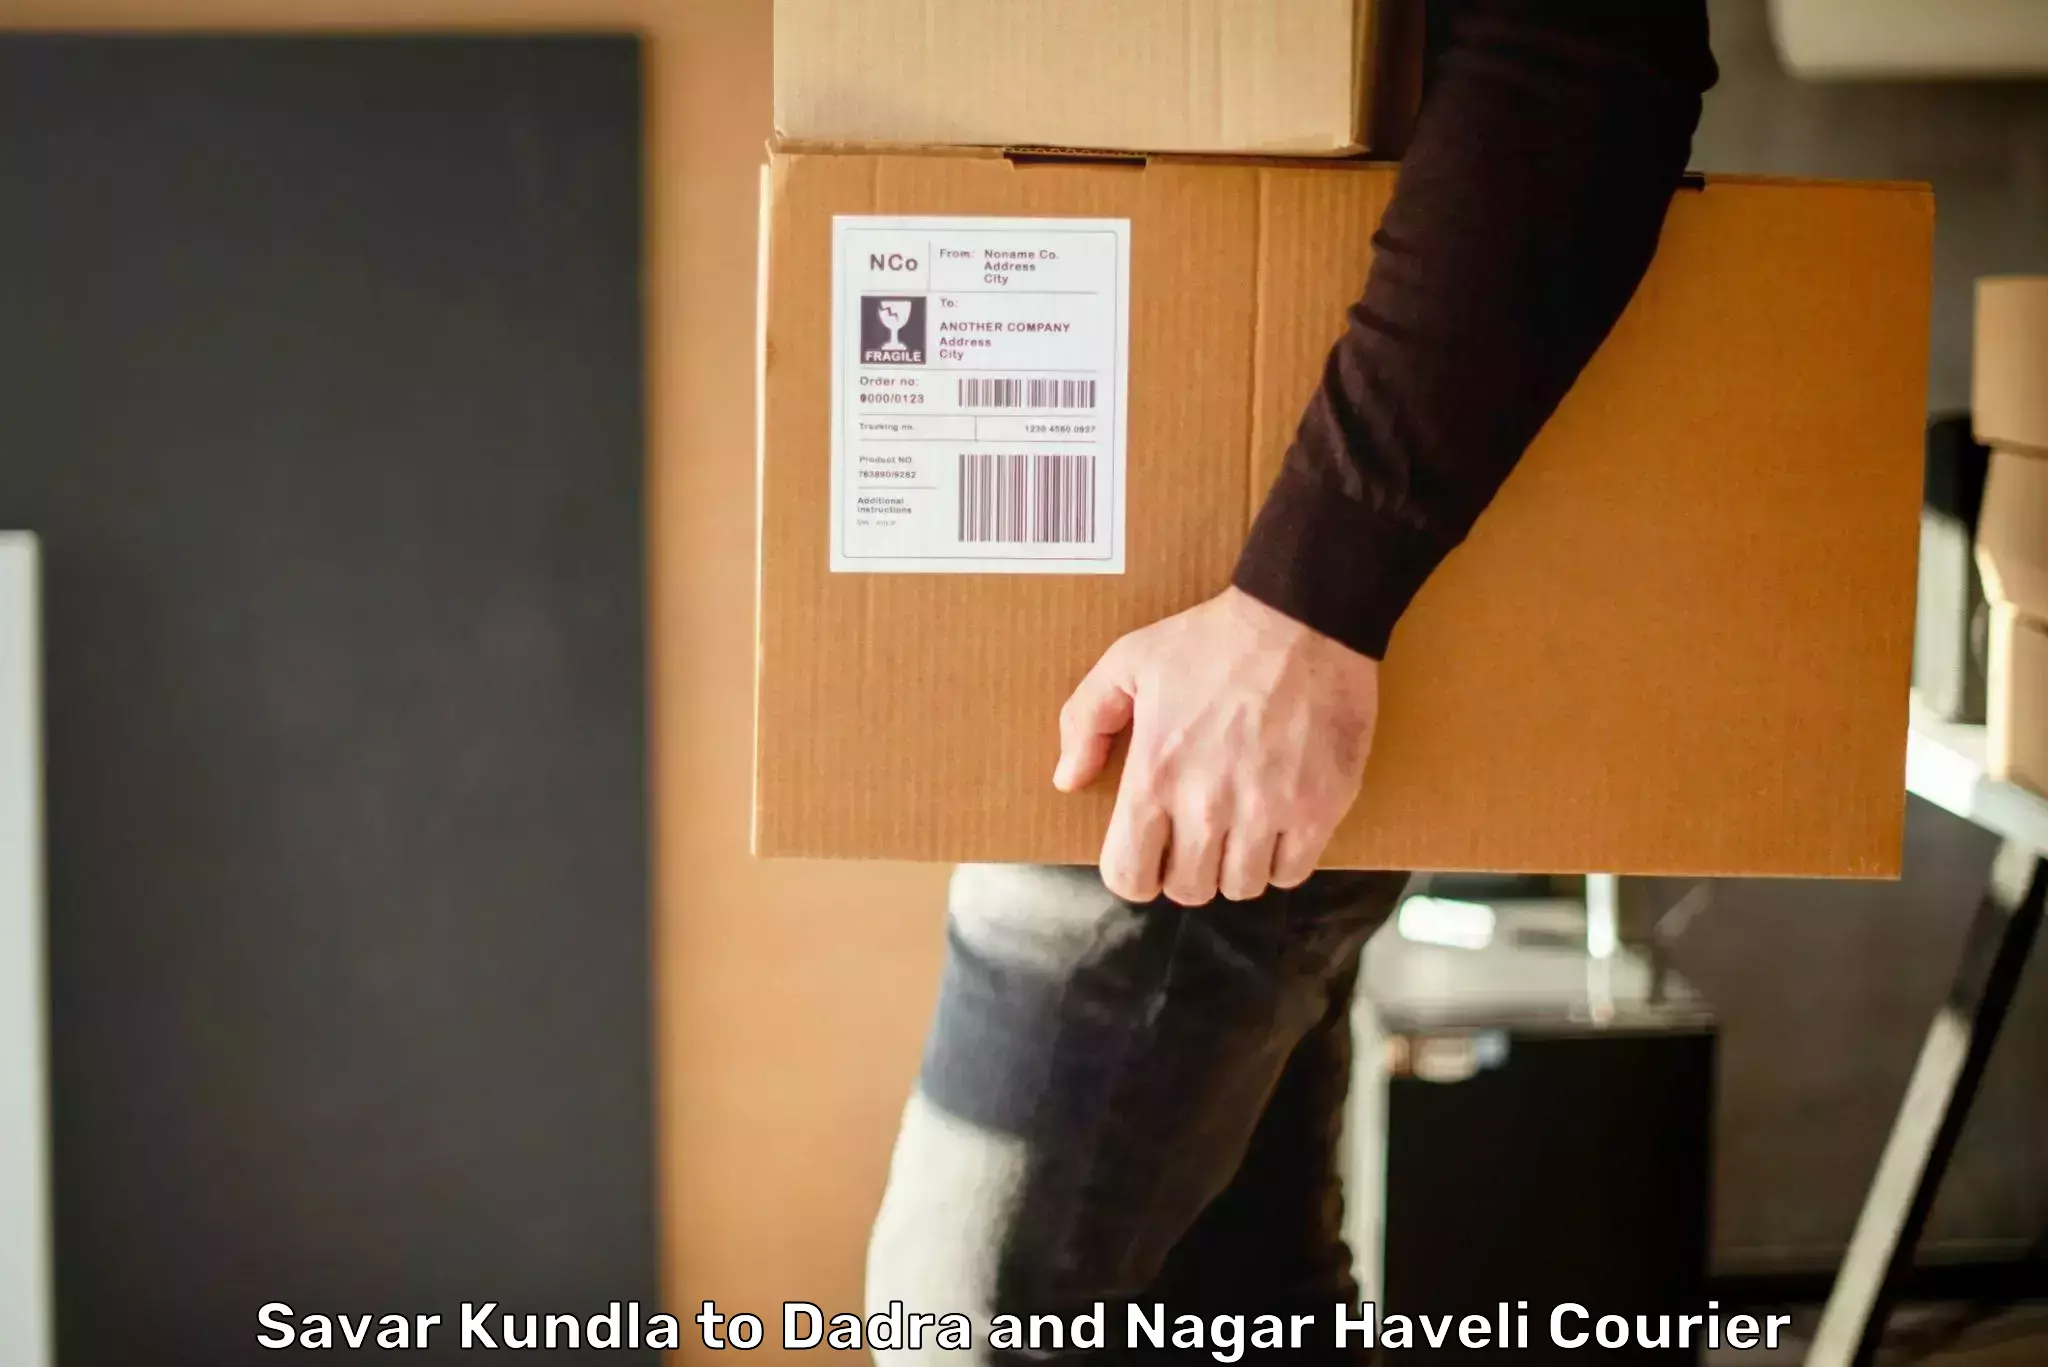 Express package delivery Savar Kundla to Silvassa